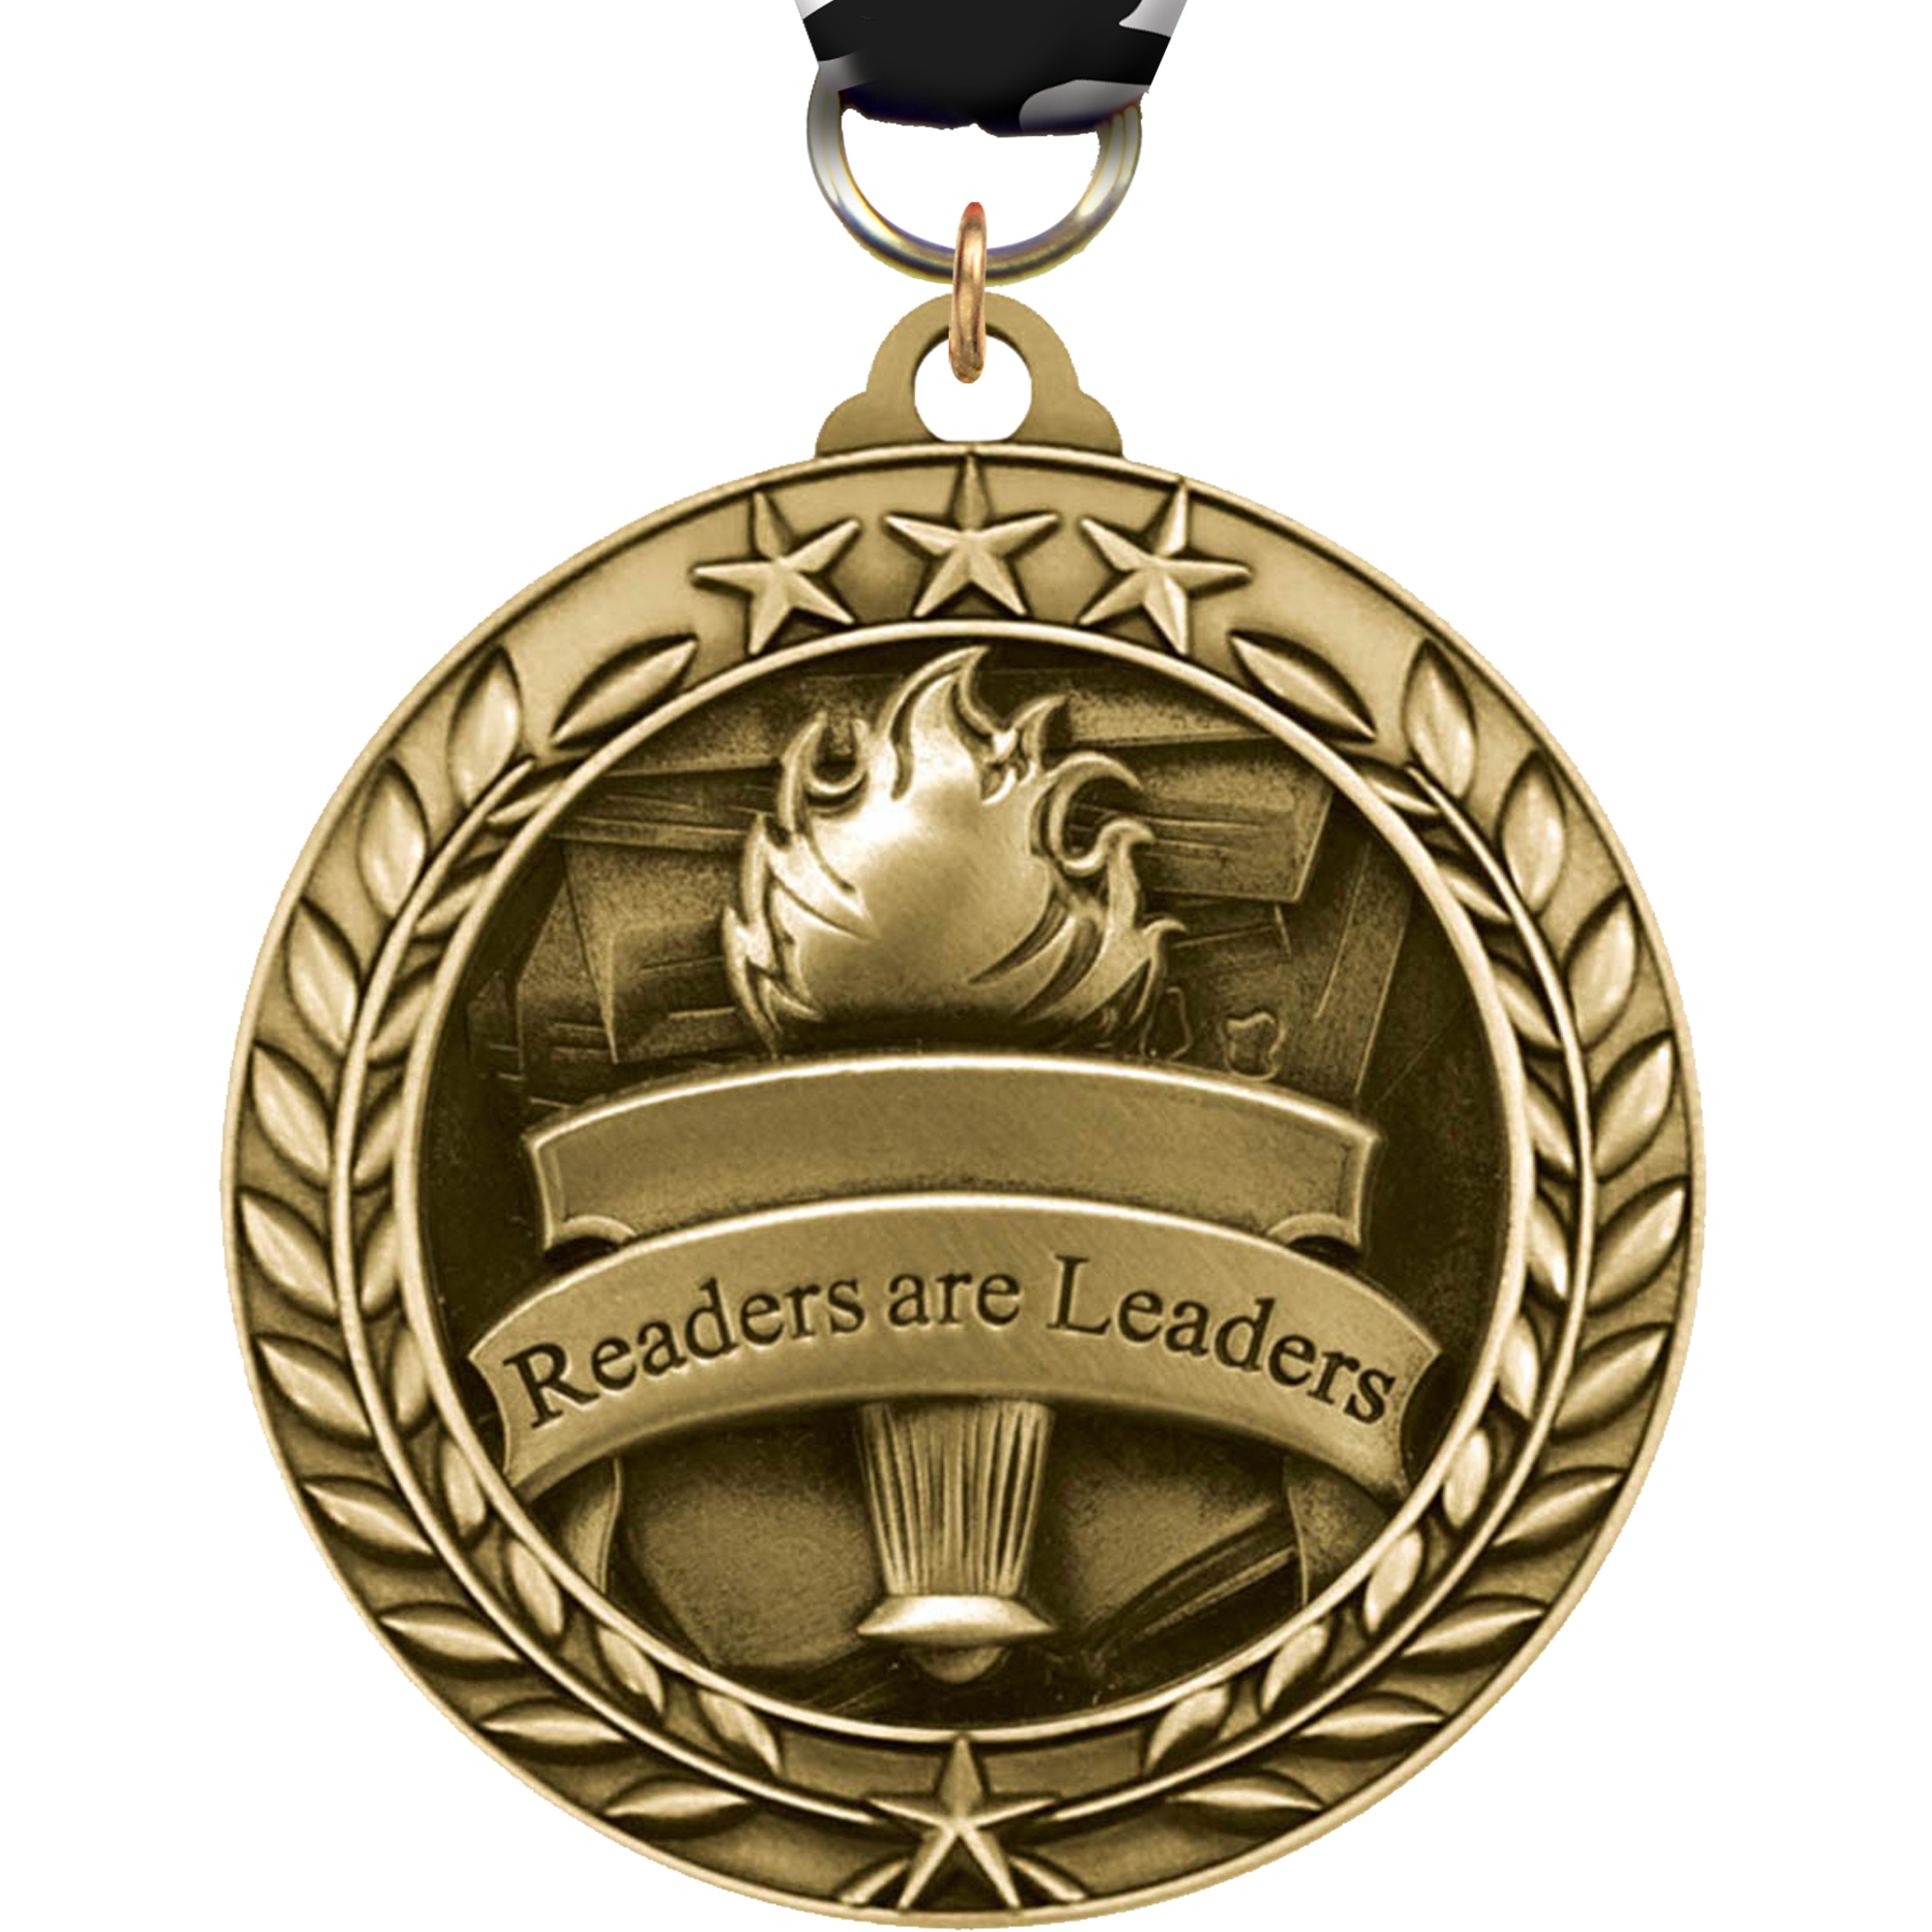 Readers are Leaders 1.75 inch Dimensional Medal